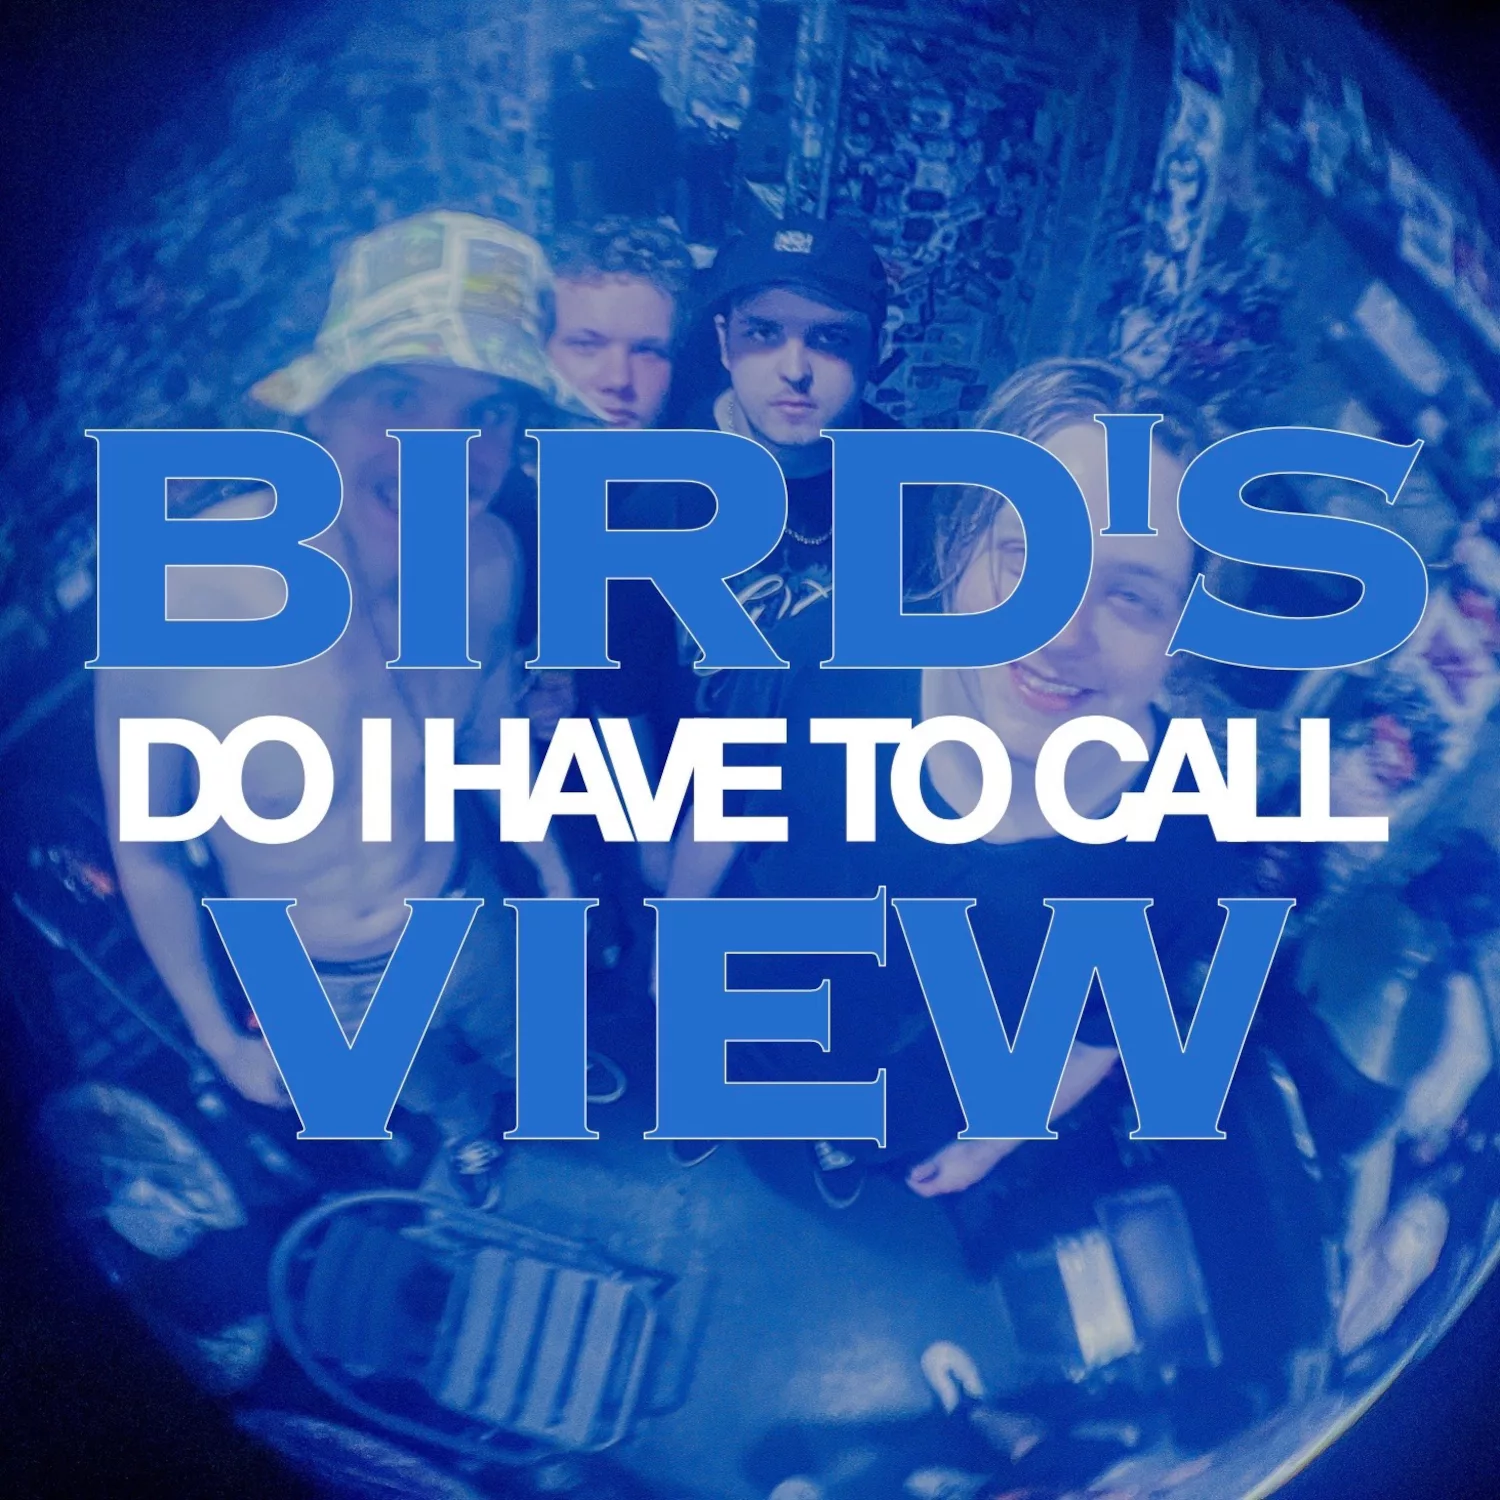 Birds View Do i have a call